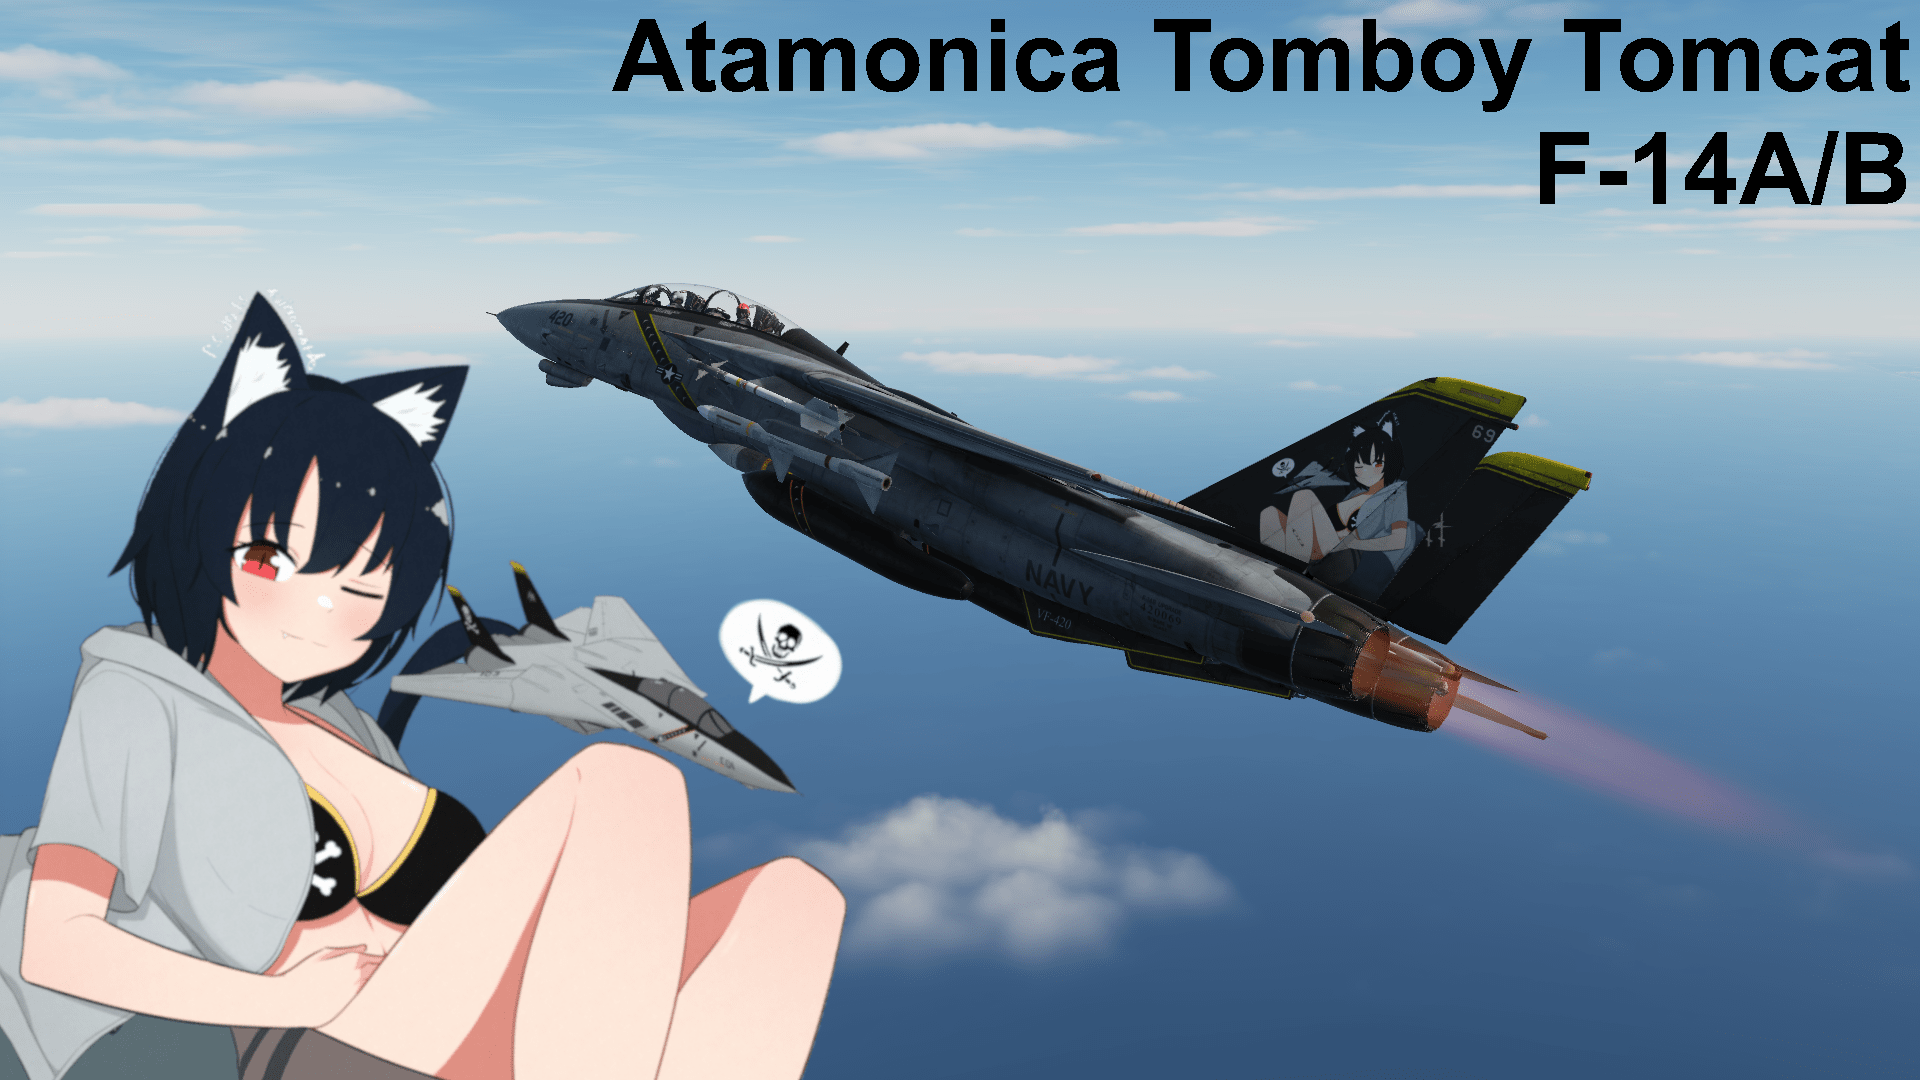 Atamonica Tomboy Tomcat F-14A/B